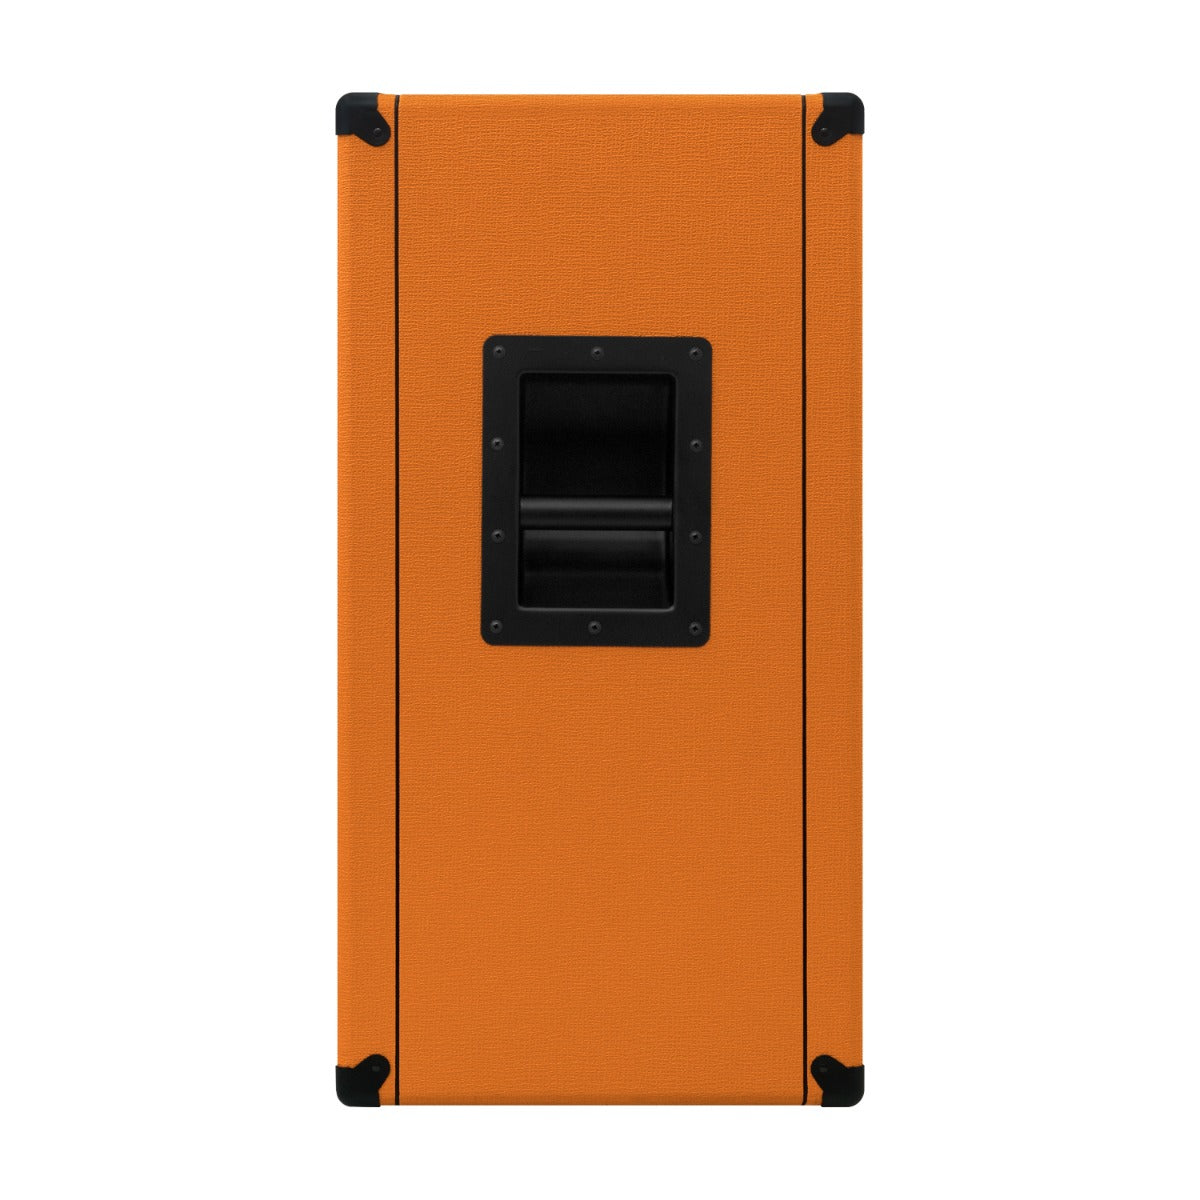 Orange PPC412 4x12" Cabinet - Orange Tolex, View 6